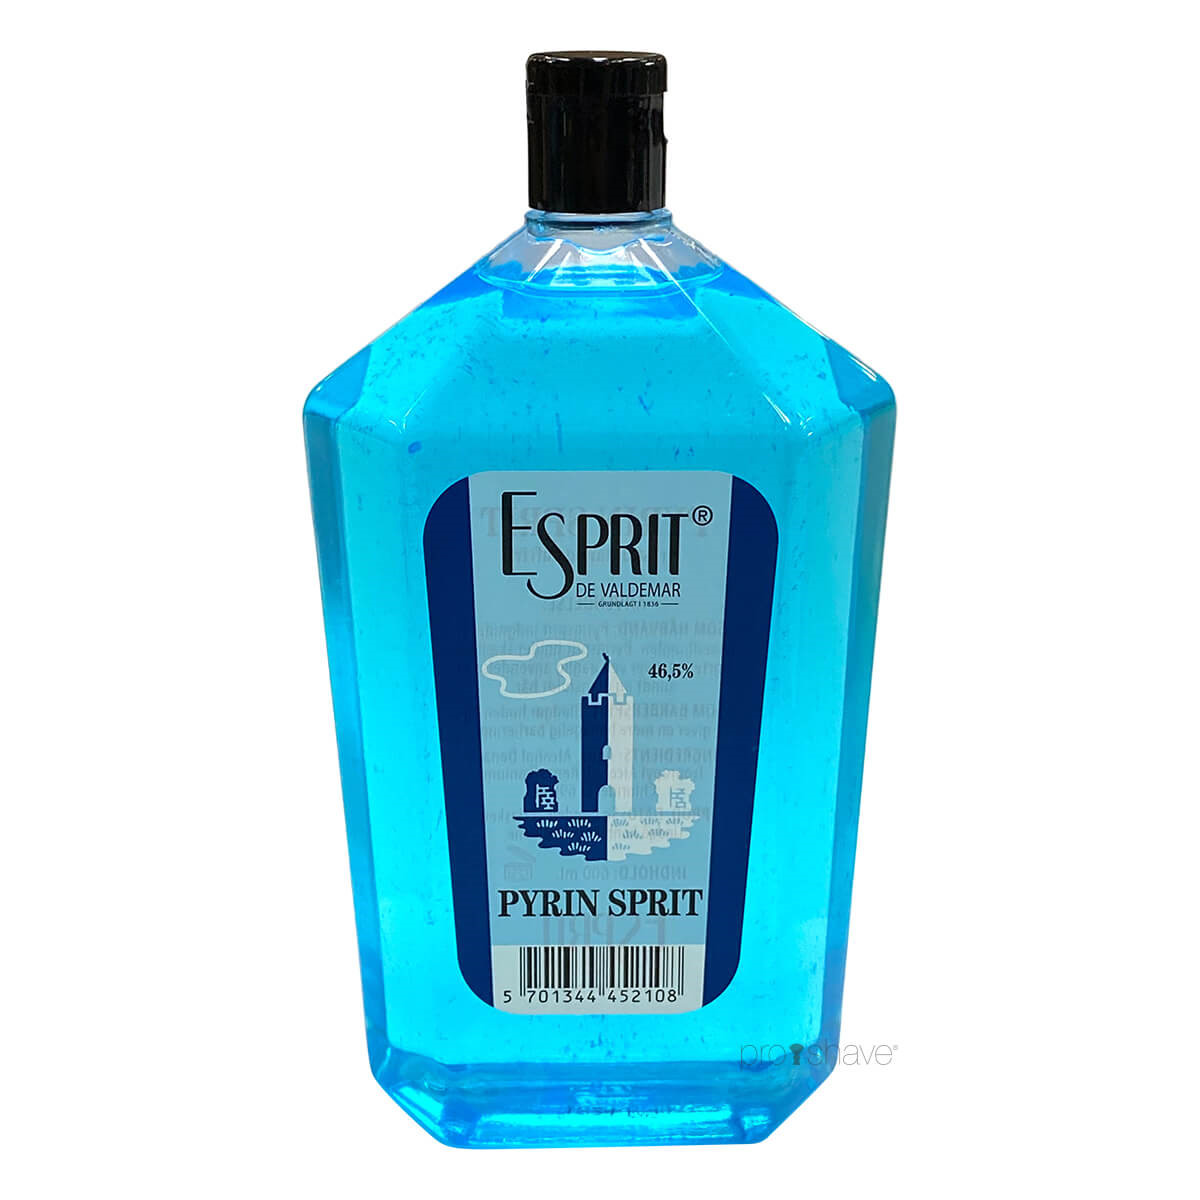 #2 - Esprit de Valdemar Pyrin Sprit, 600 ml.